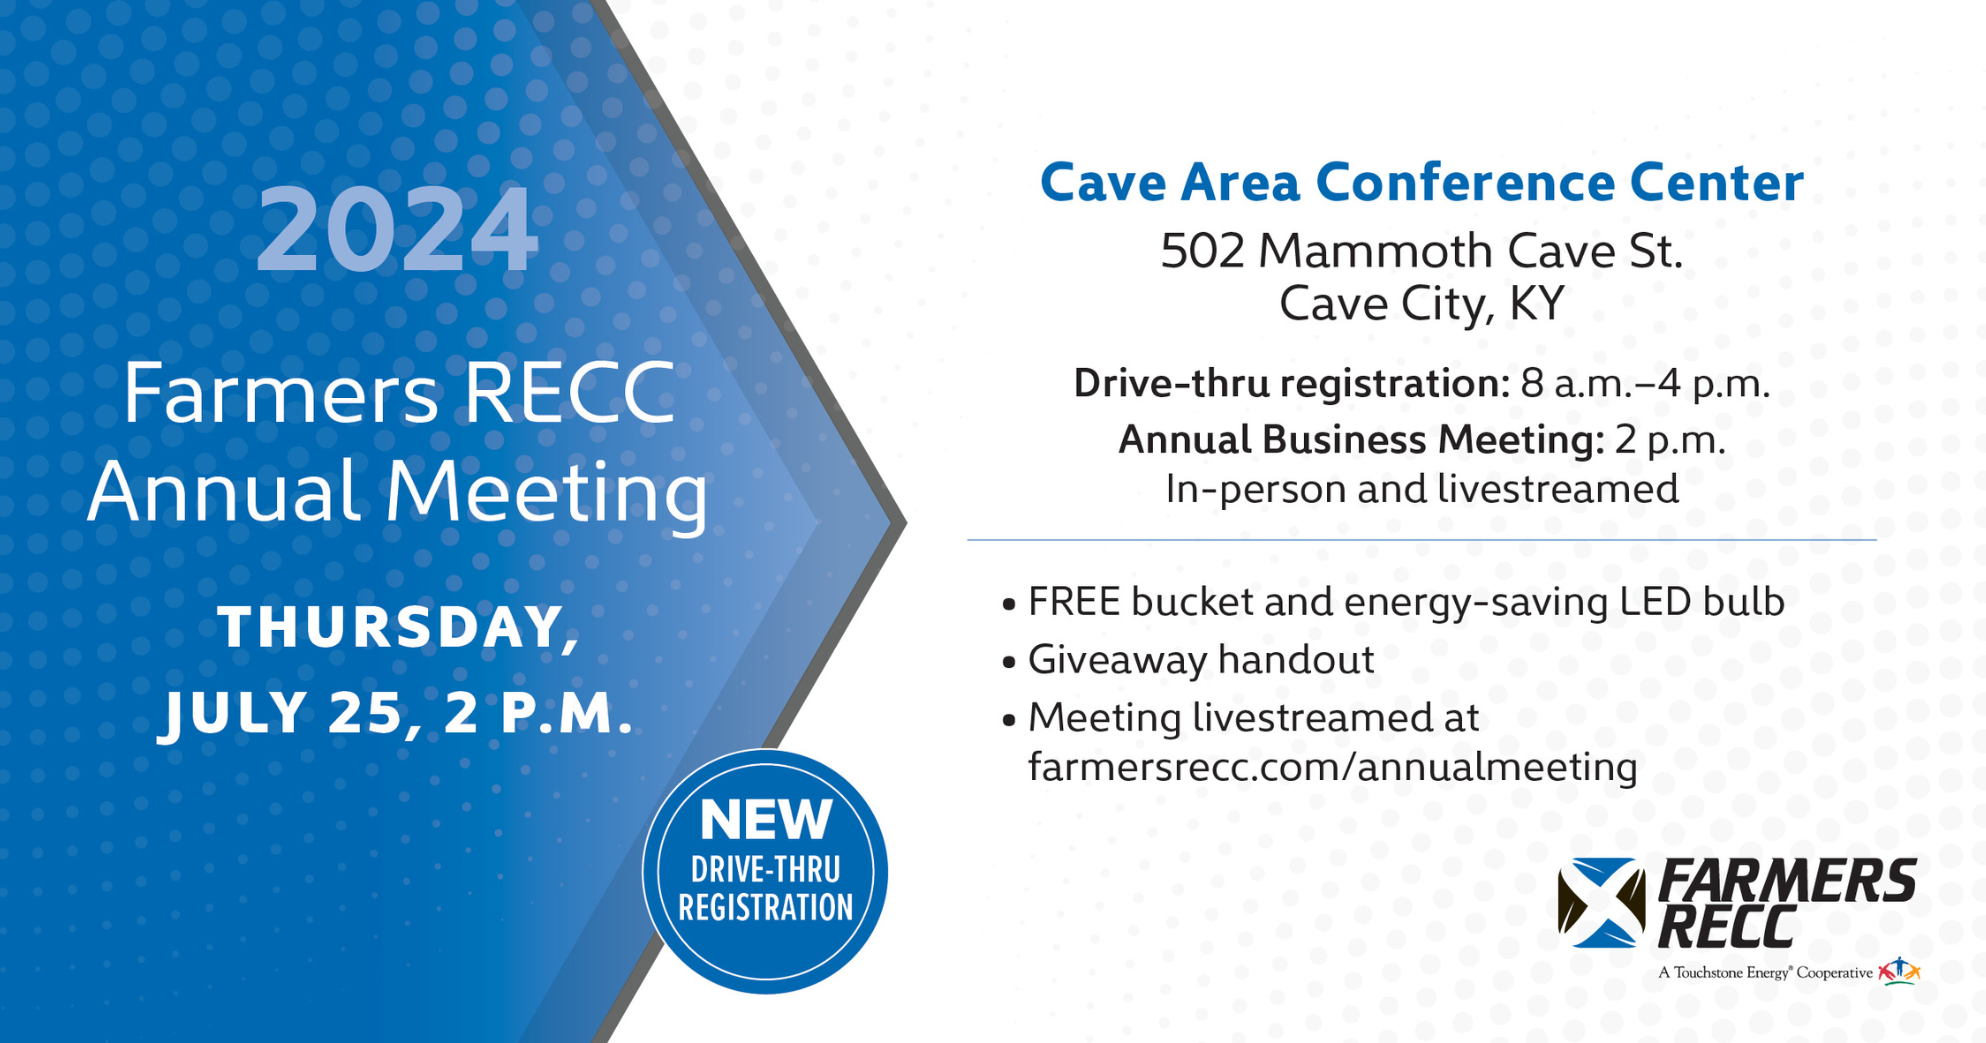 Farmers RECC Annual Meeting Information